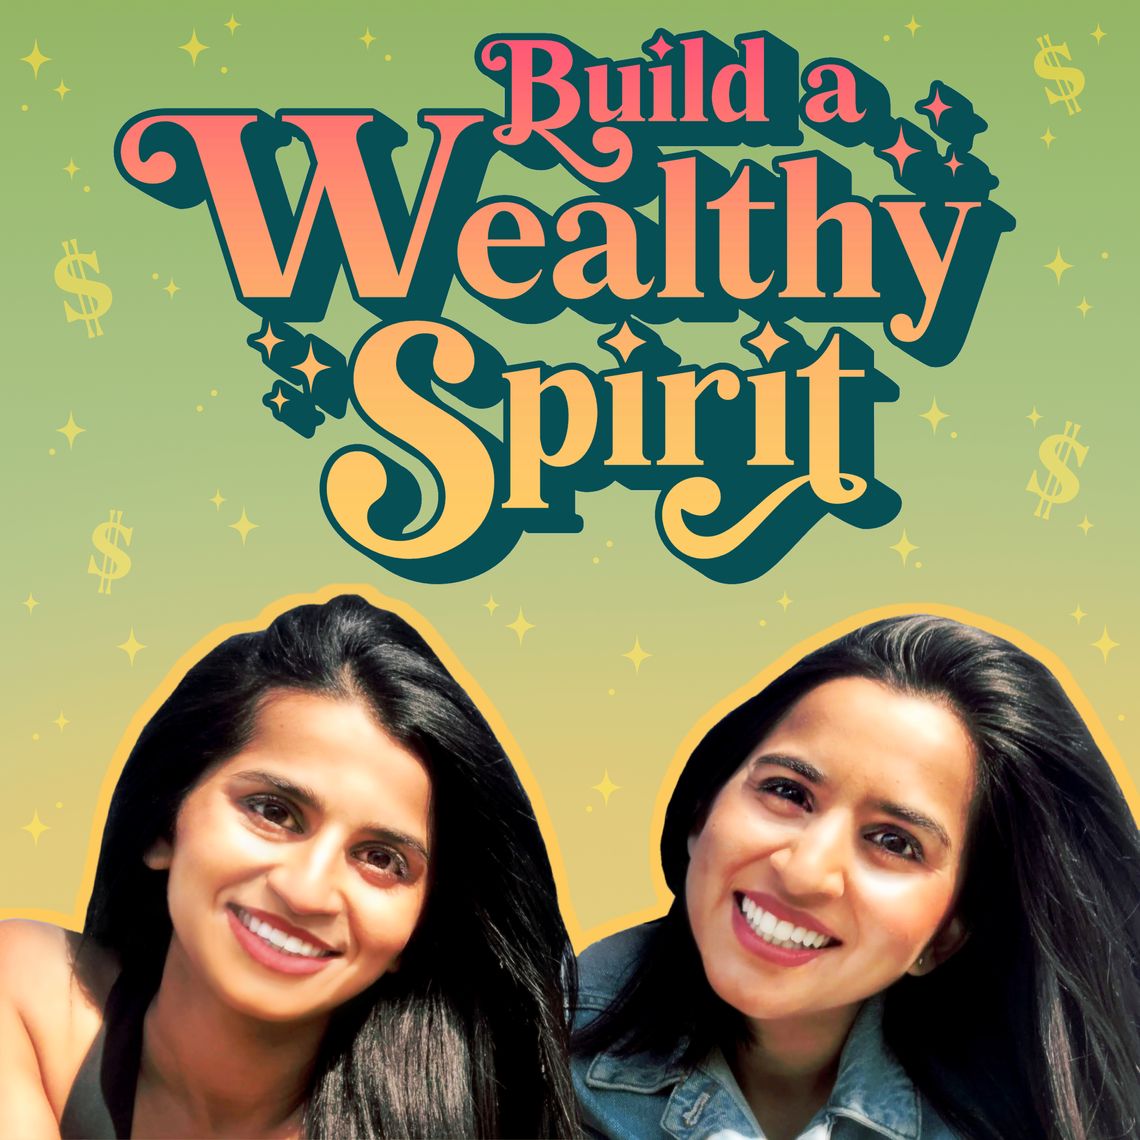 Build a Wealthy Spirit